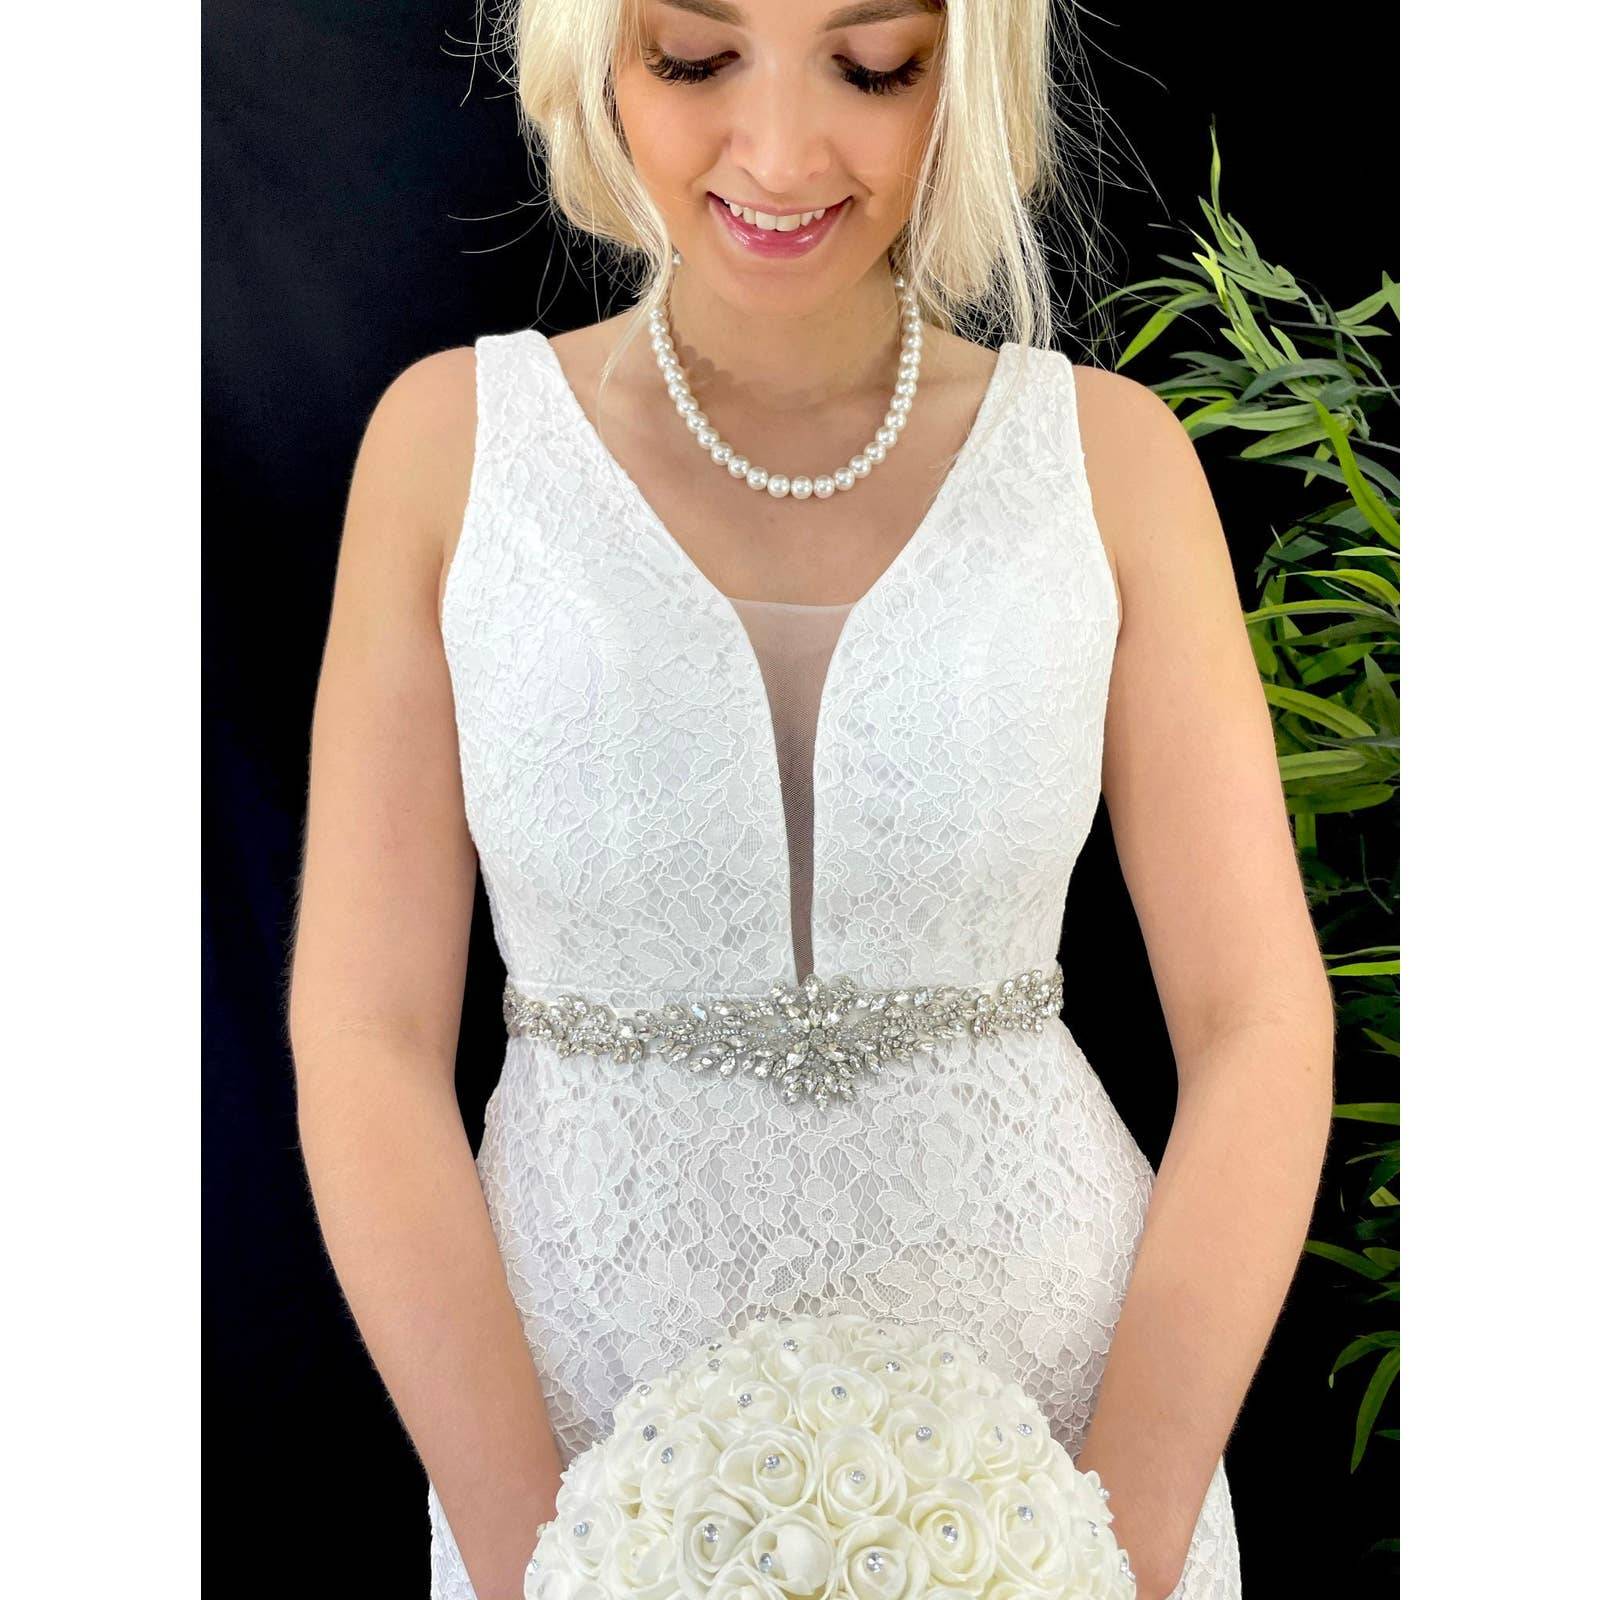 Bridal dress belt - wedding dress belt - Rhinestones belt